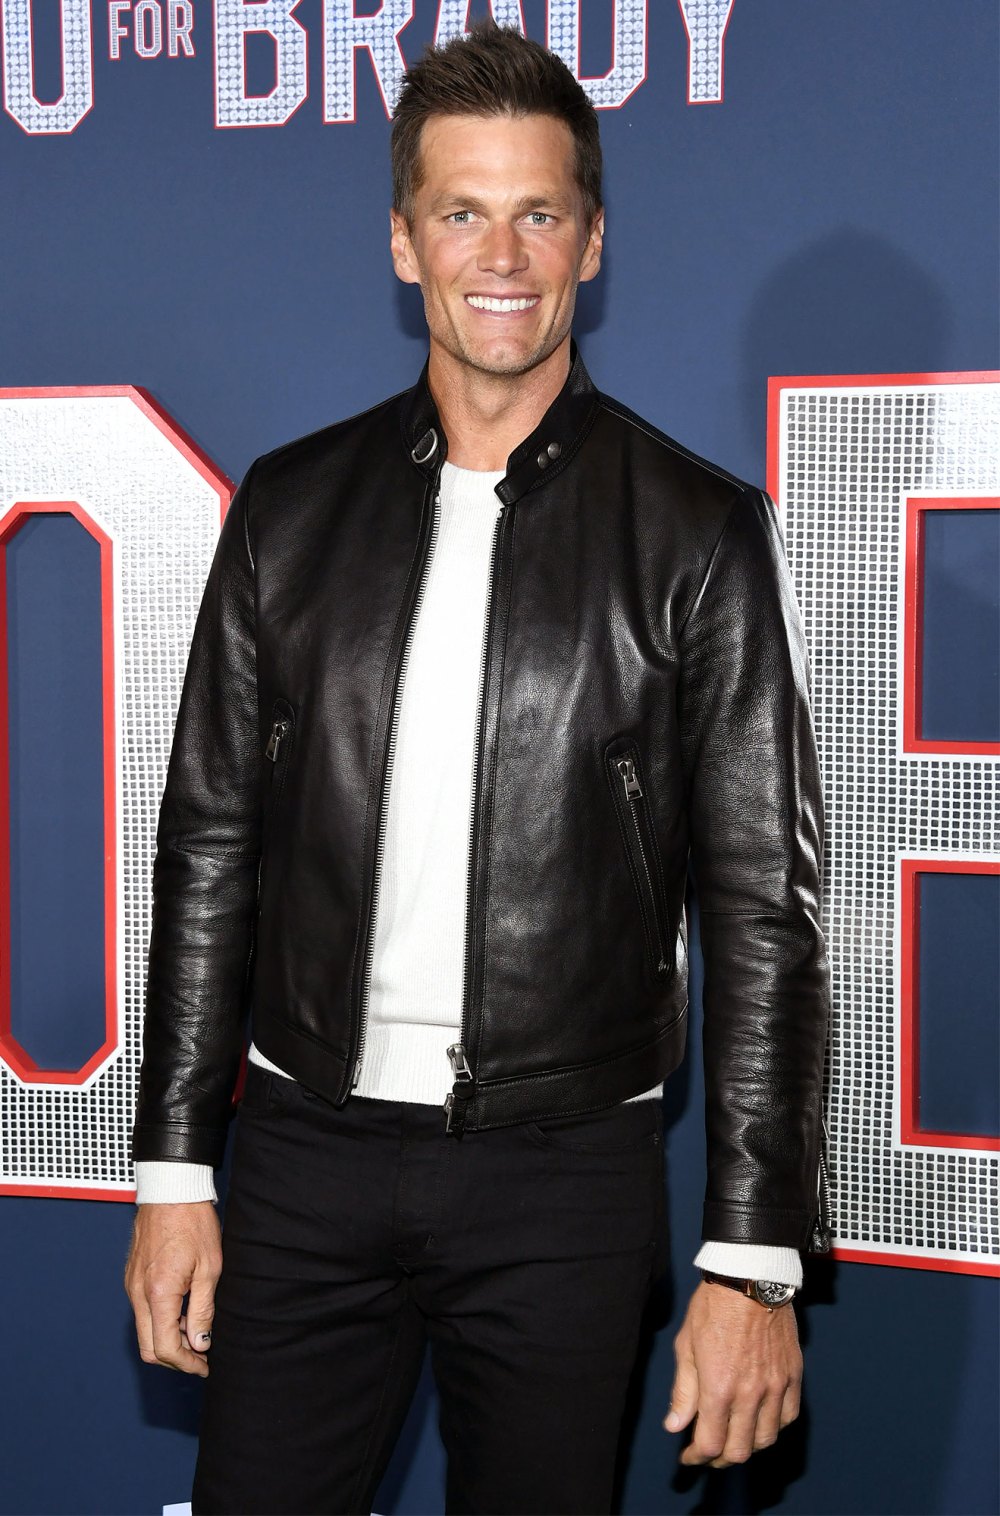 Tom Brady Isn’t Bothered by Irina Shayk’s Bradley Cooper PDA: ‘Things Are Still Very New’